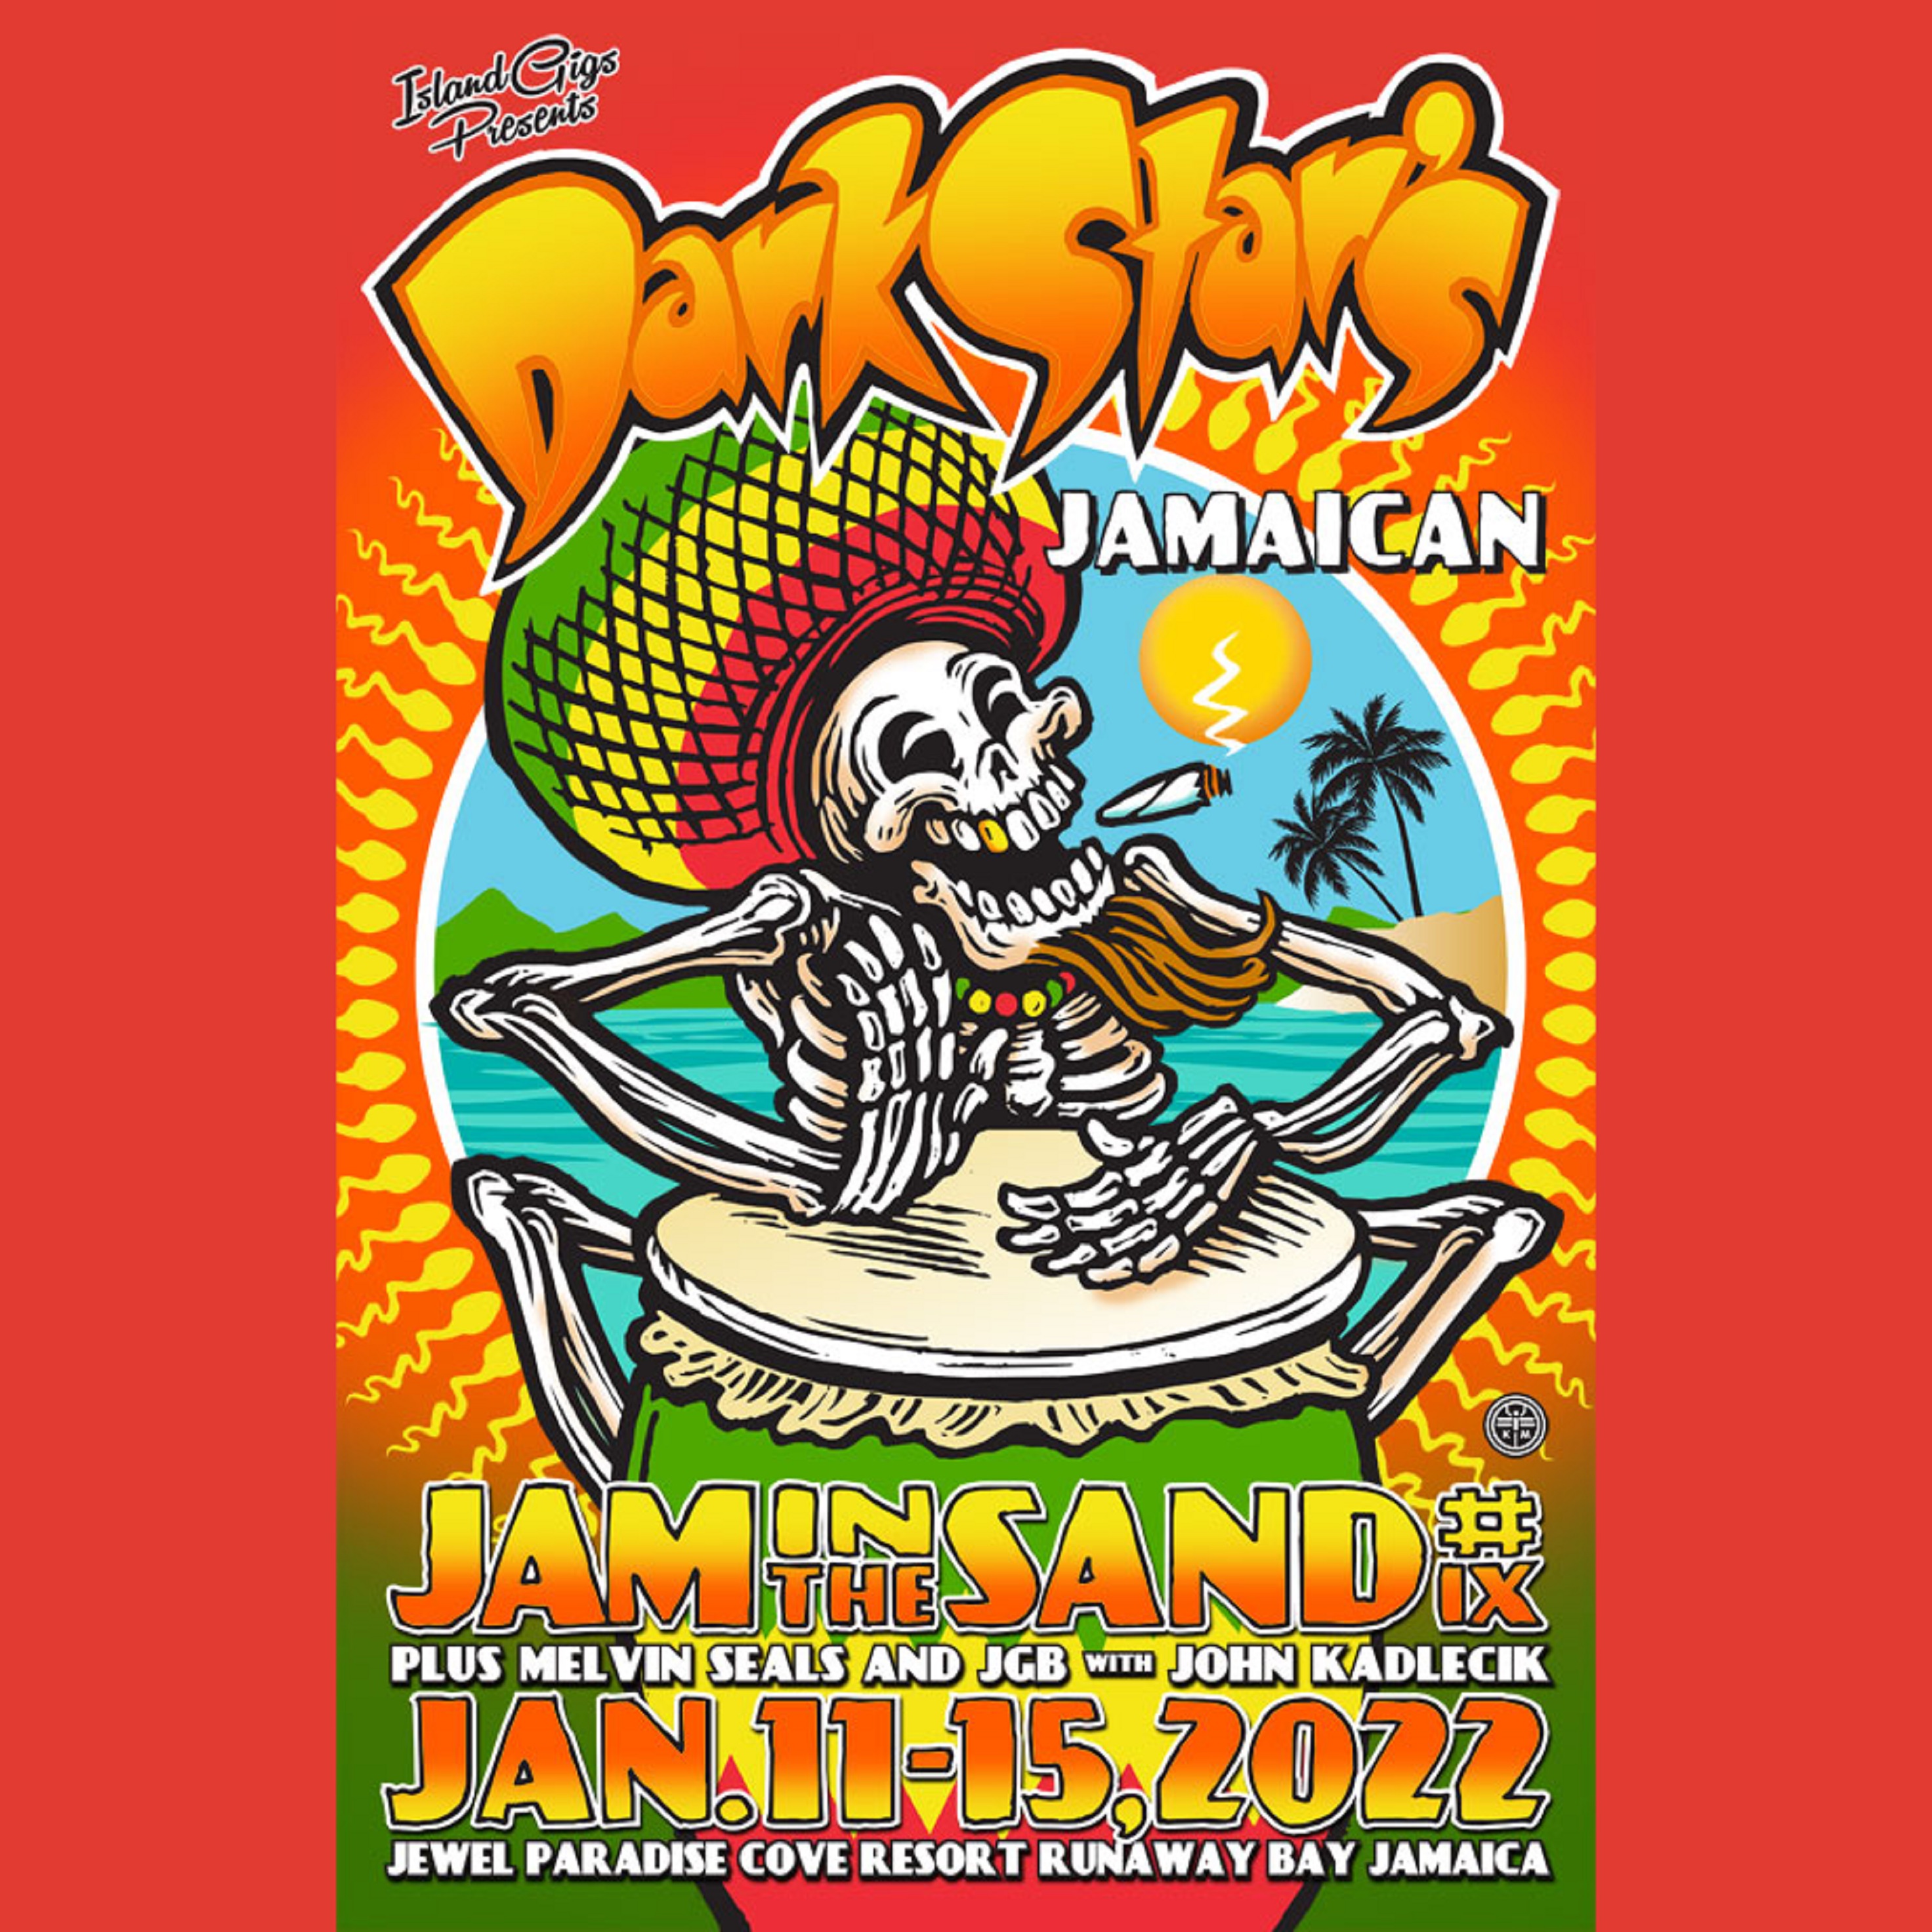 Dark Star Orchestra Plots 2022 Return to Jamaica for 'Jam in the Sand' Festival